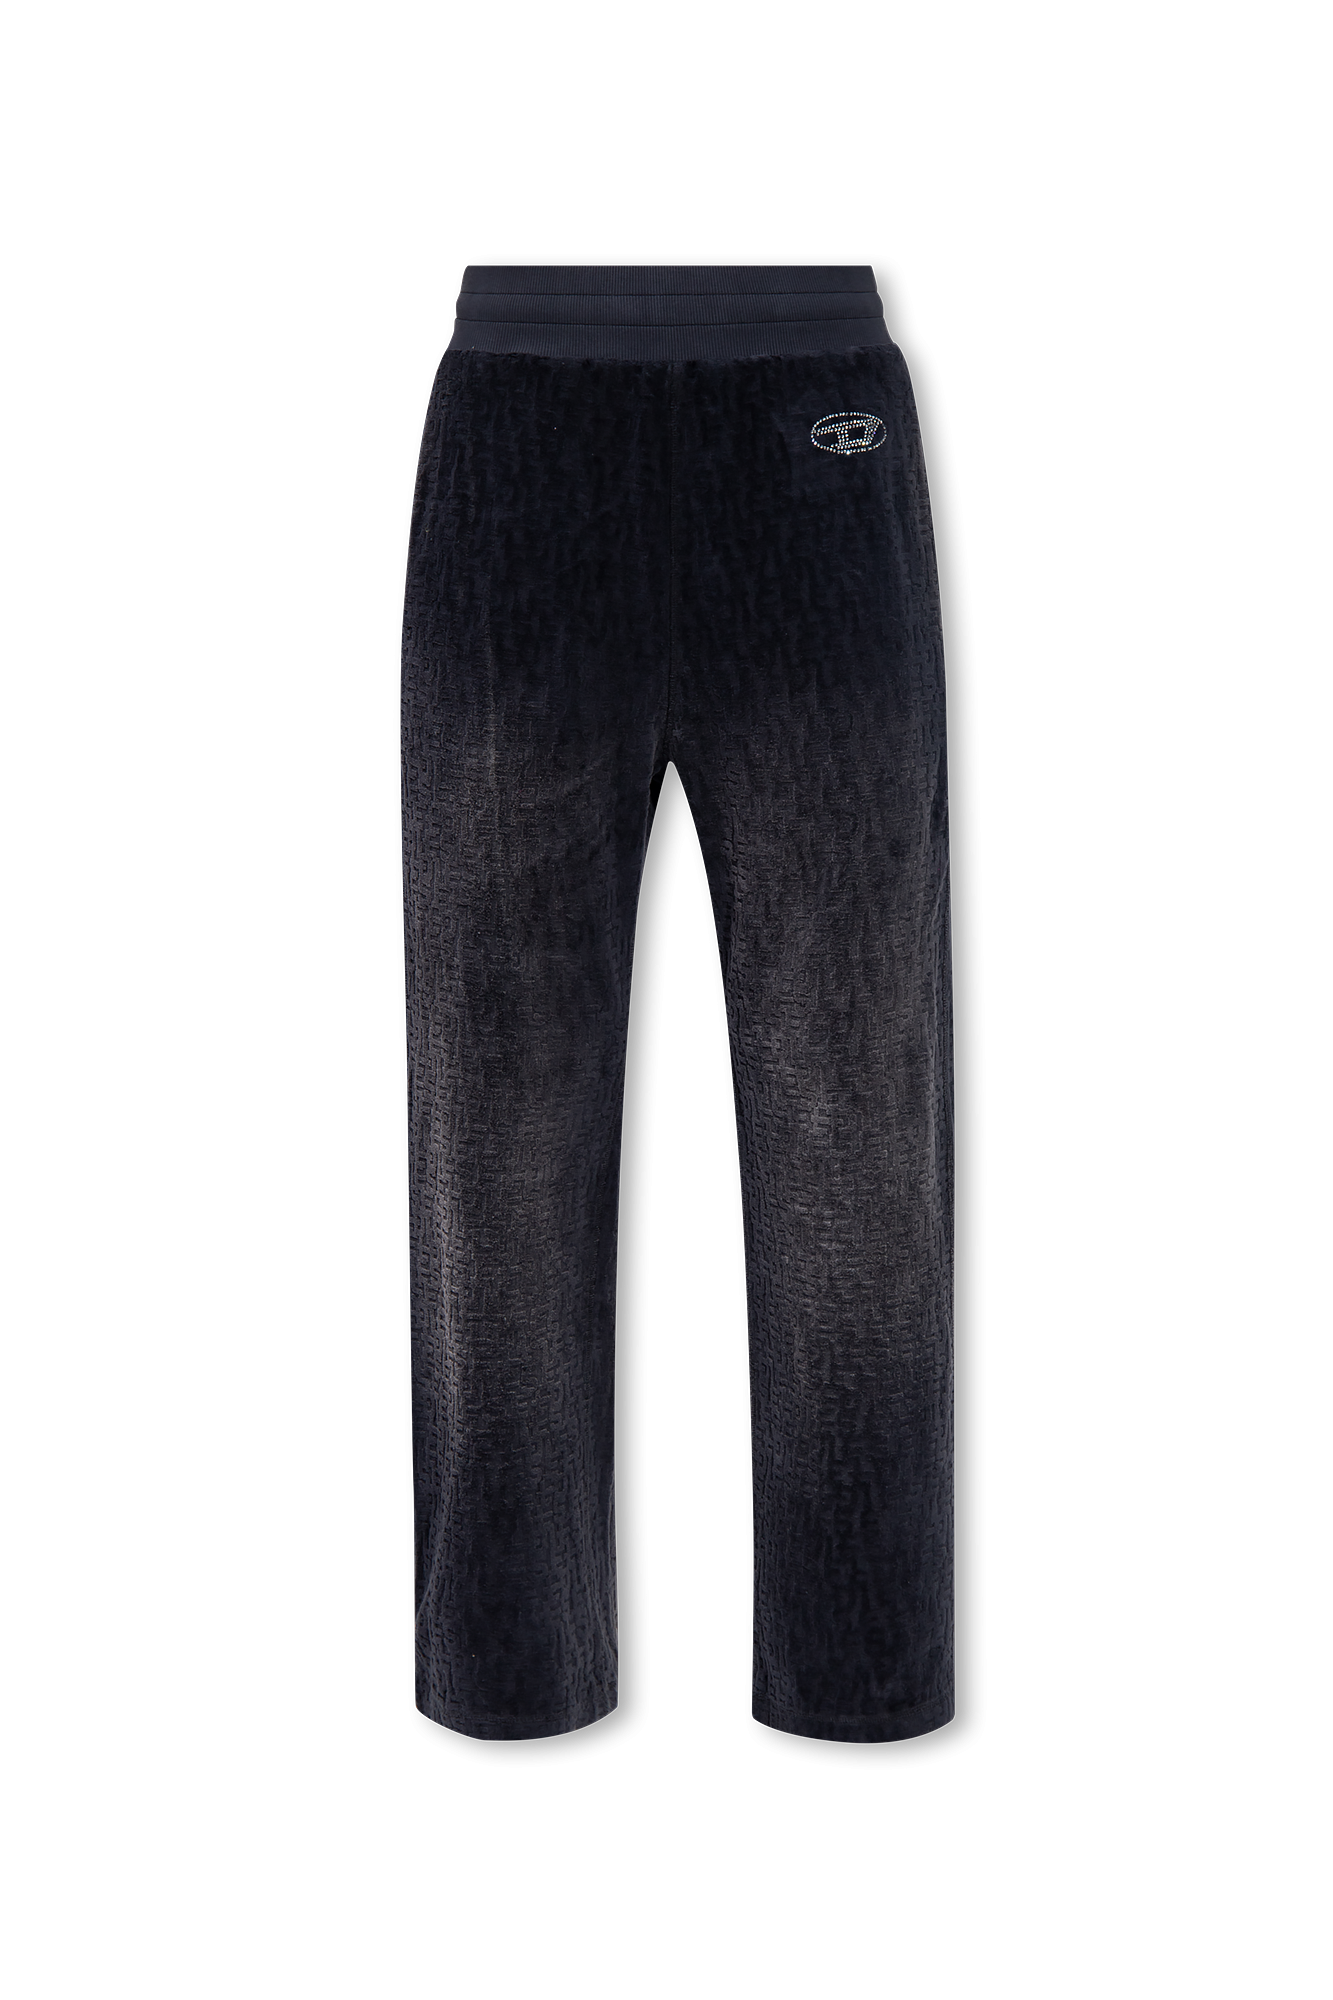 Black Sweatpants with logo Amiri - Vitkac GB